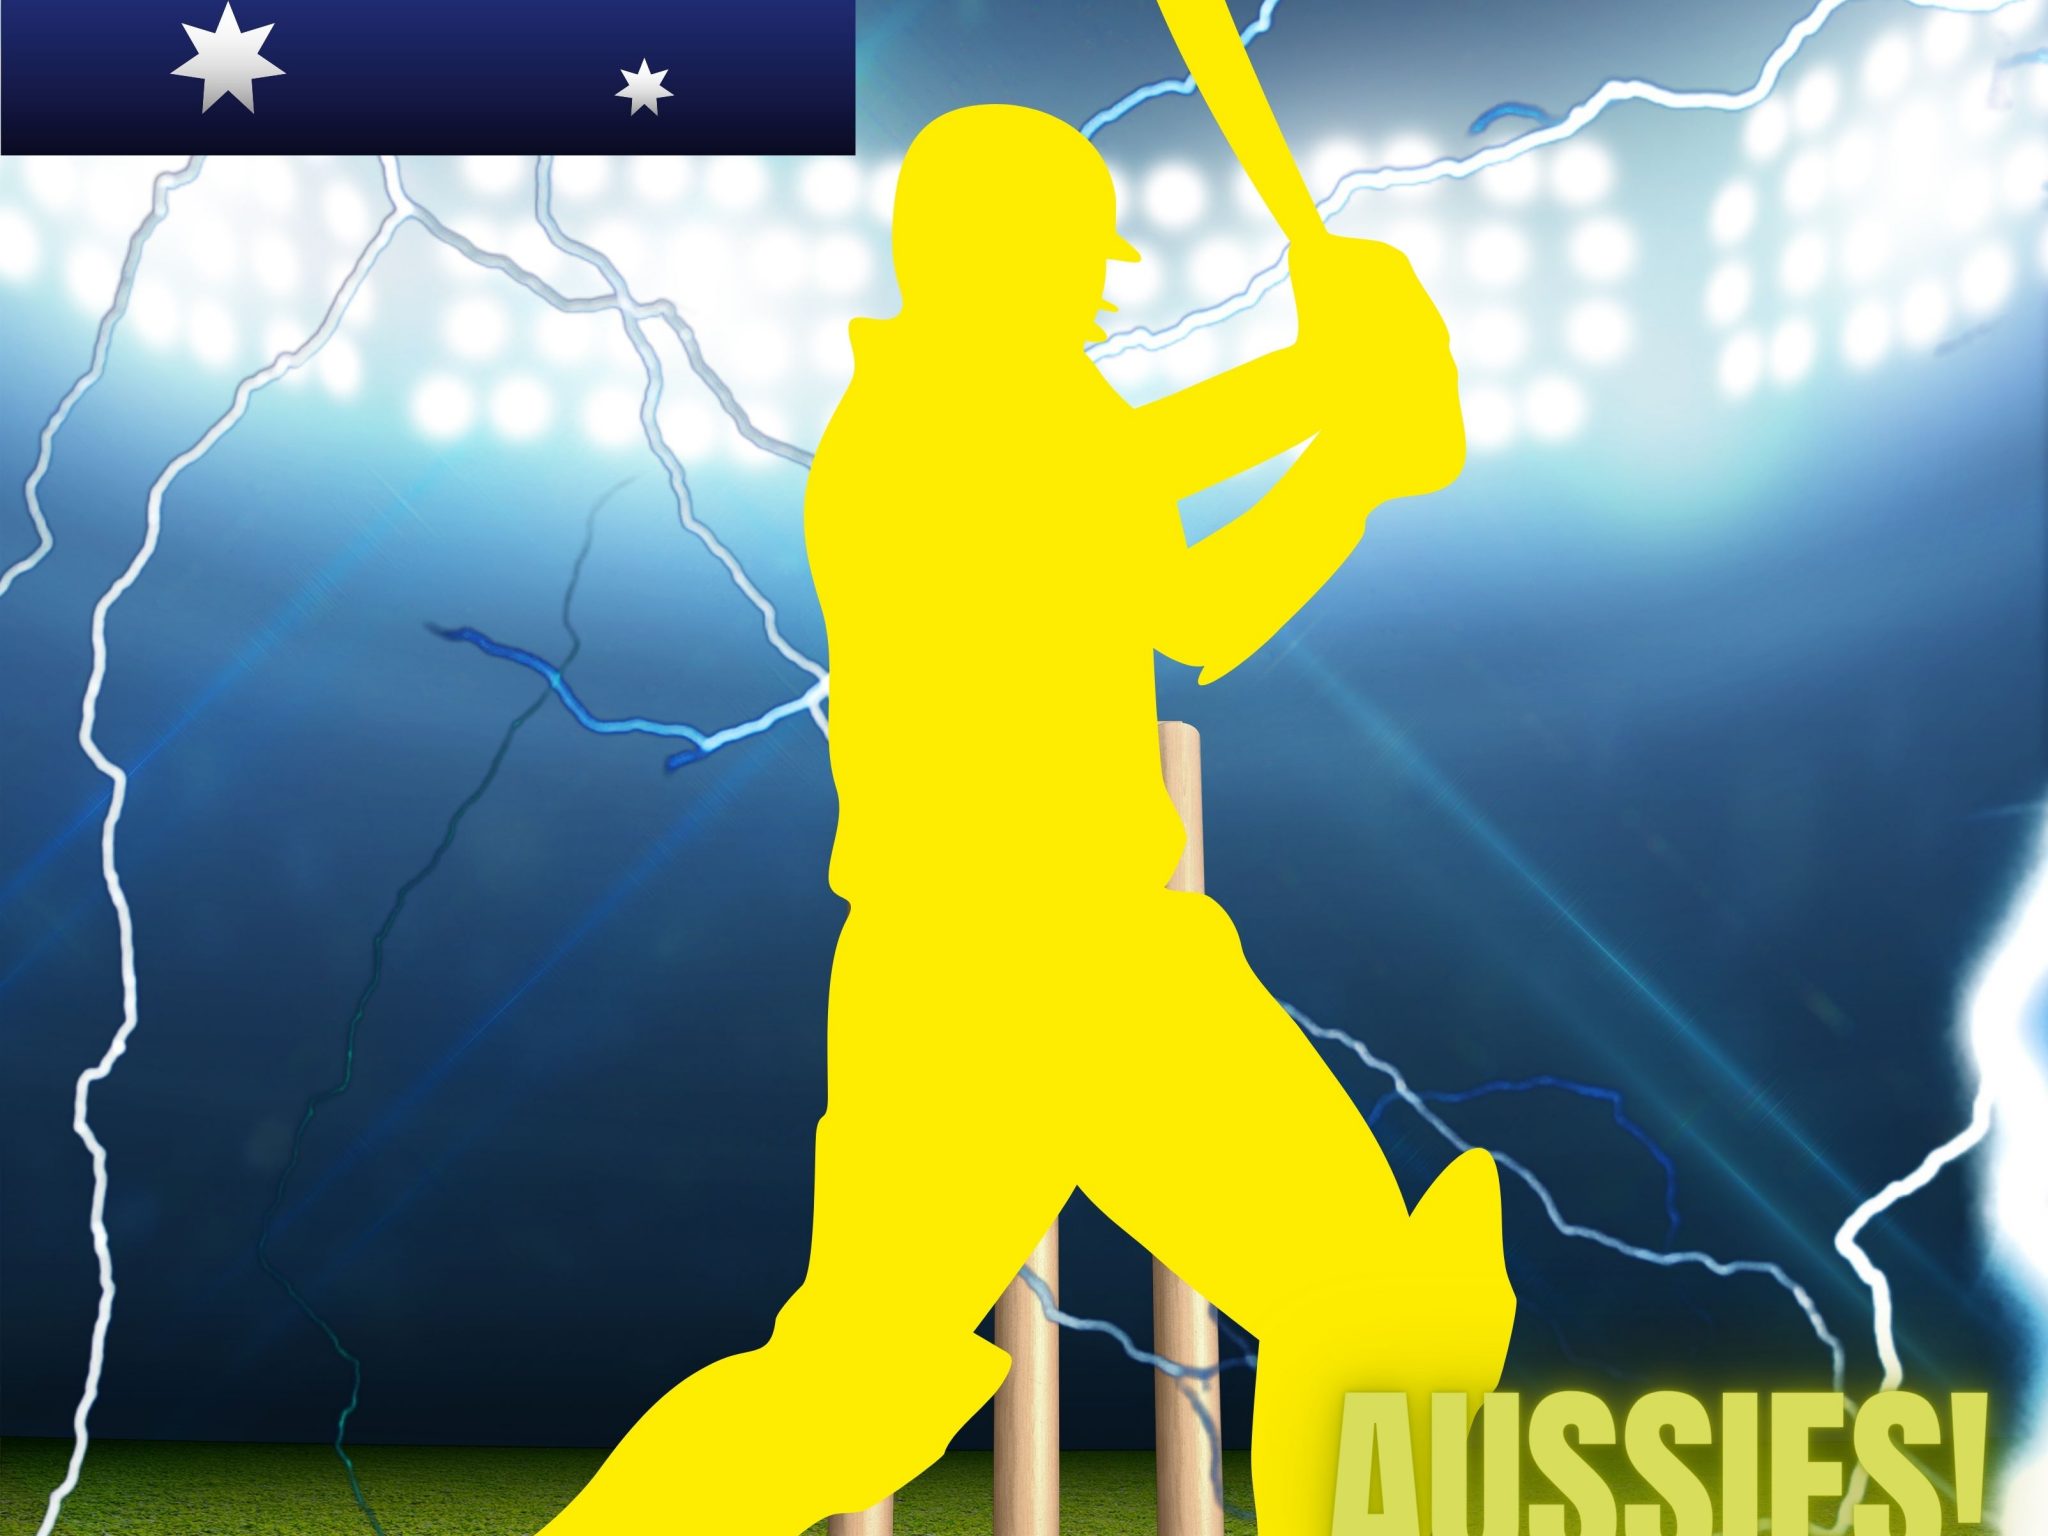 2048x1536 wallpaper Australia Cricket Stadium iPad Wallpaper 2048x1536 pixels resolution